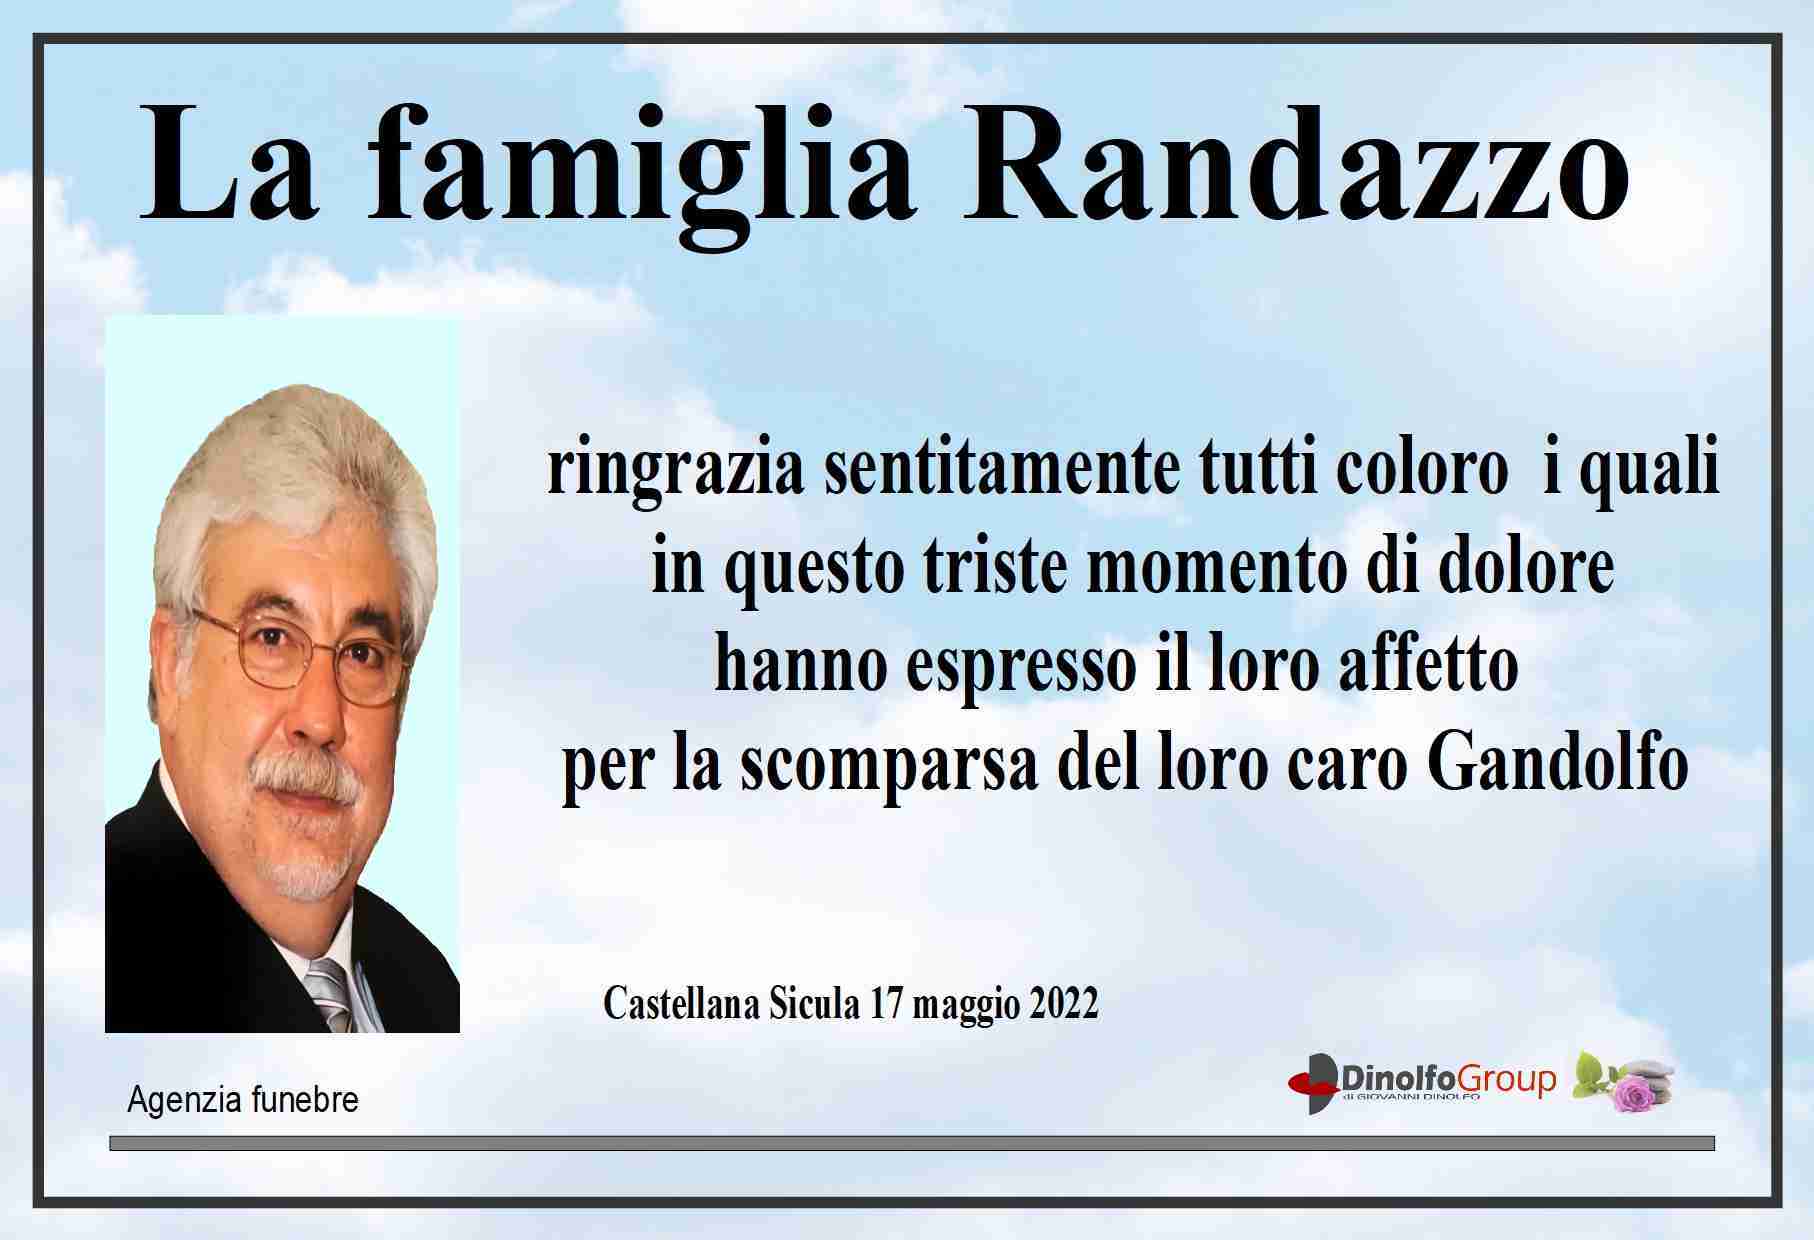 Gandolfo Paolo Randazzo